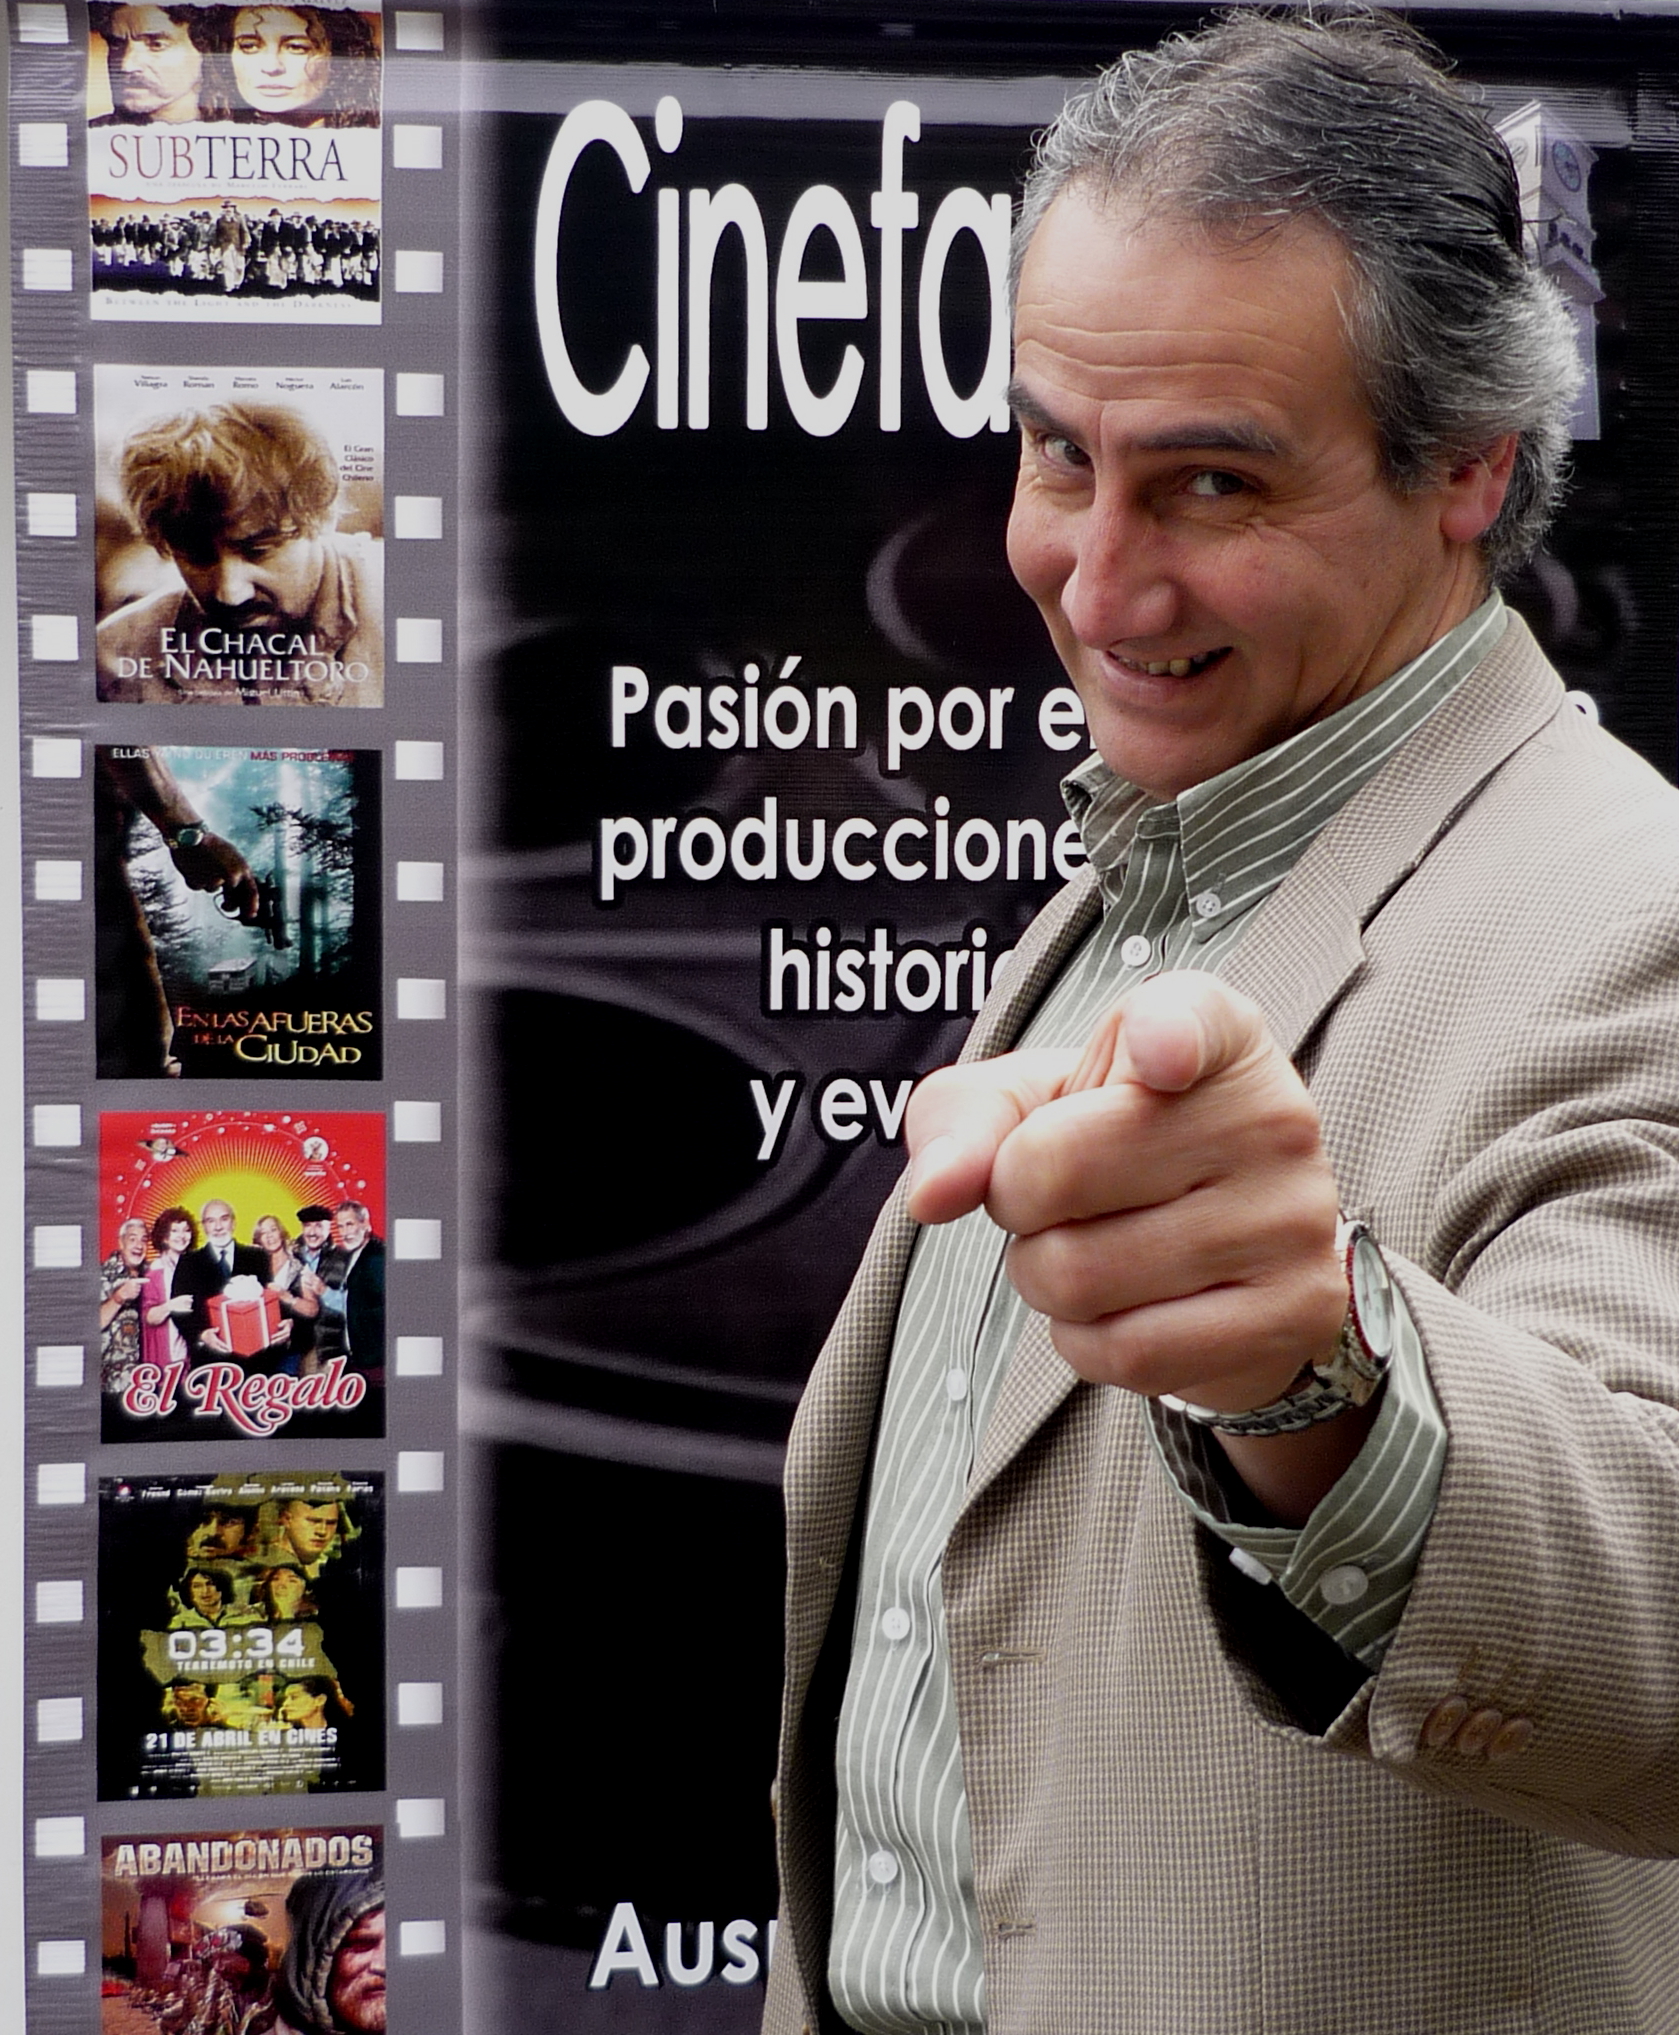 Luis Vitalino Grandón in Cinefanchile